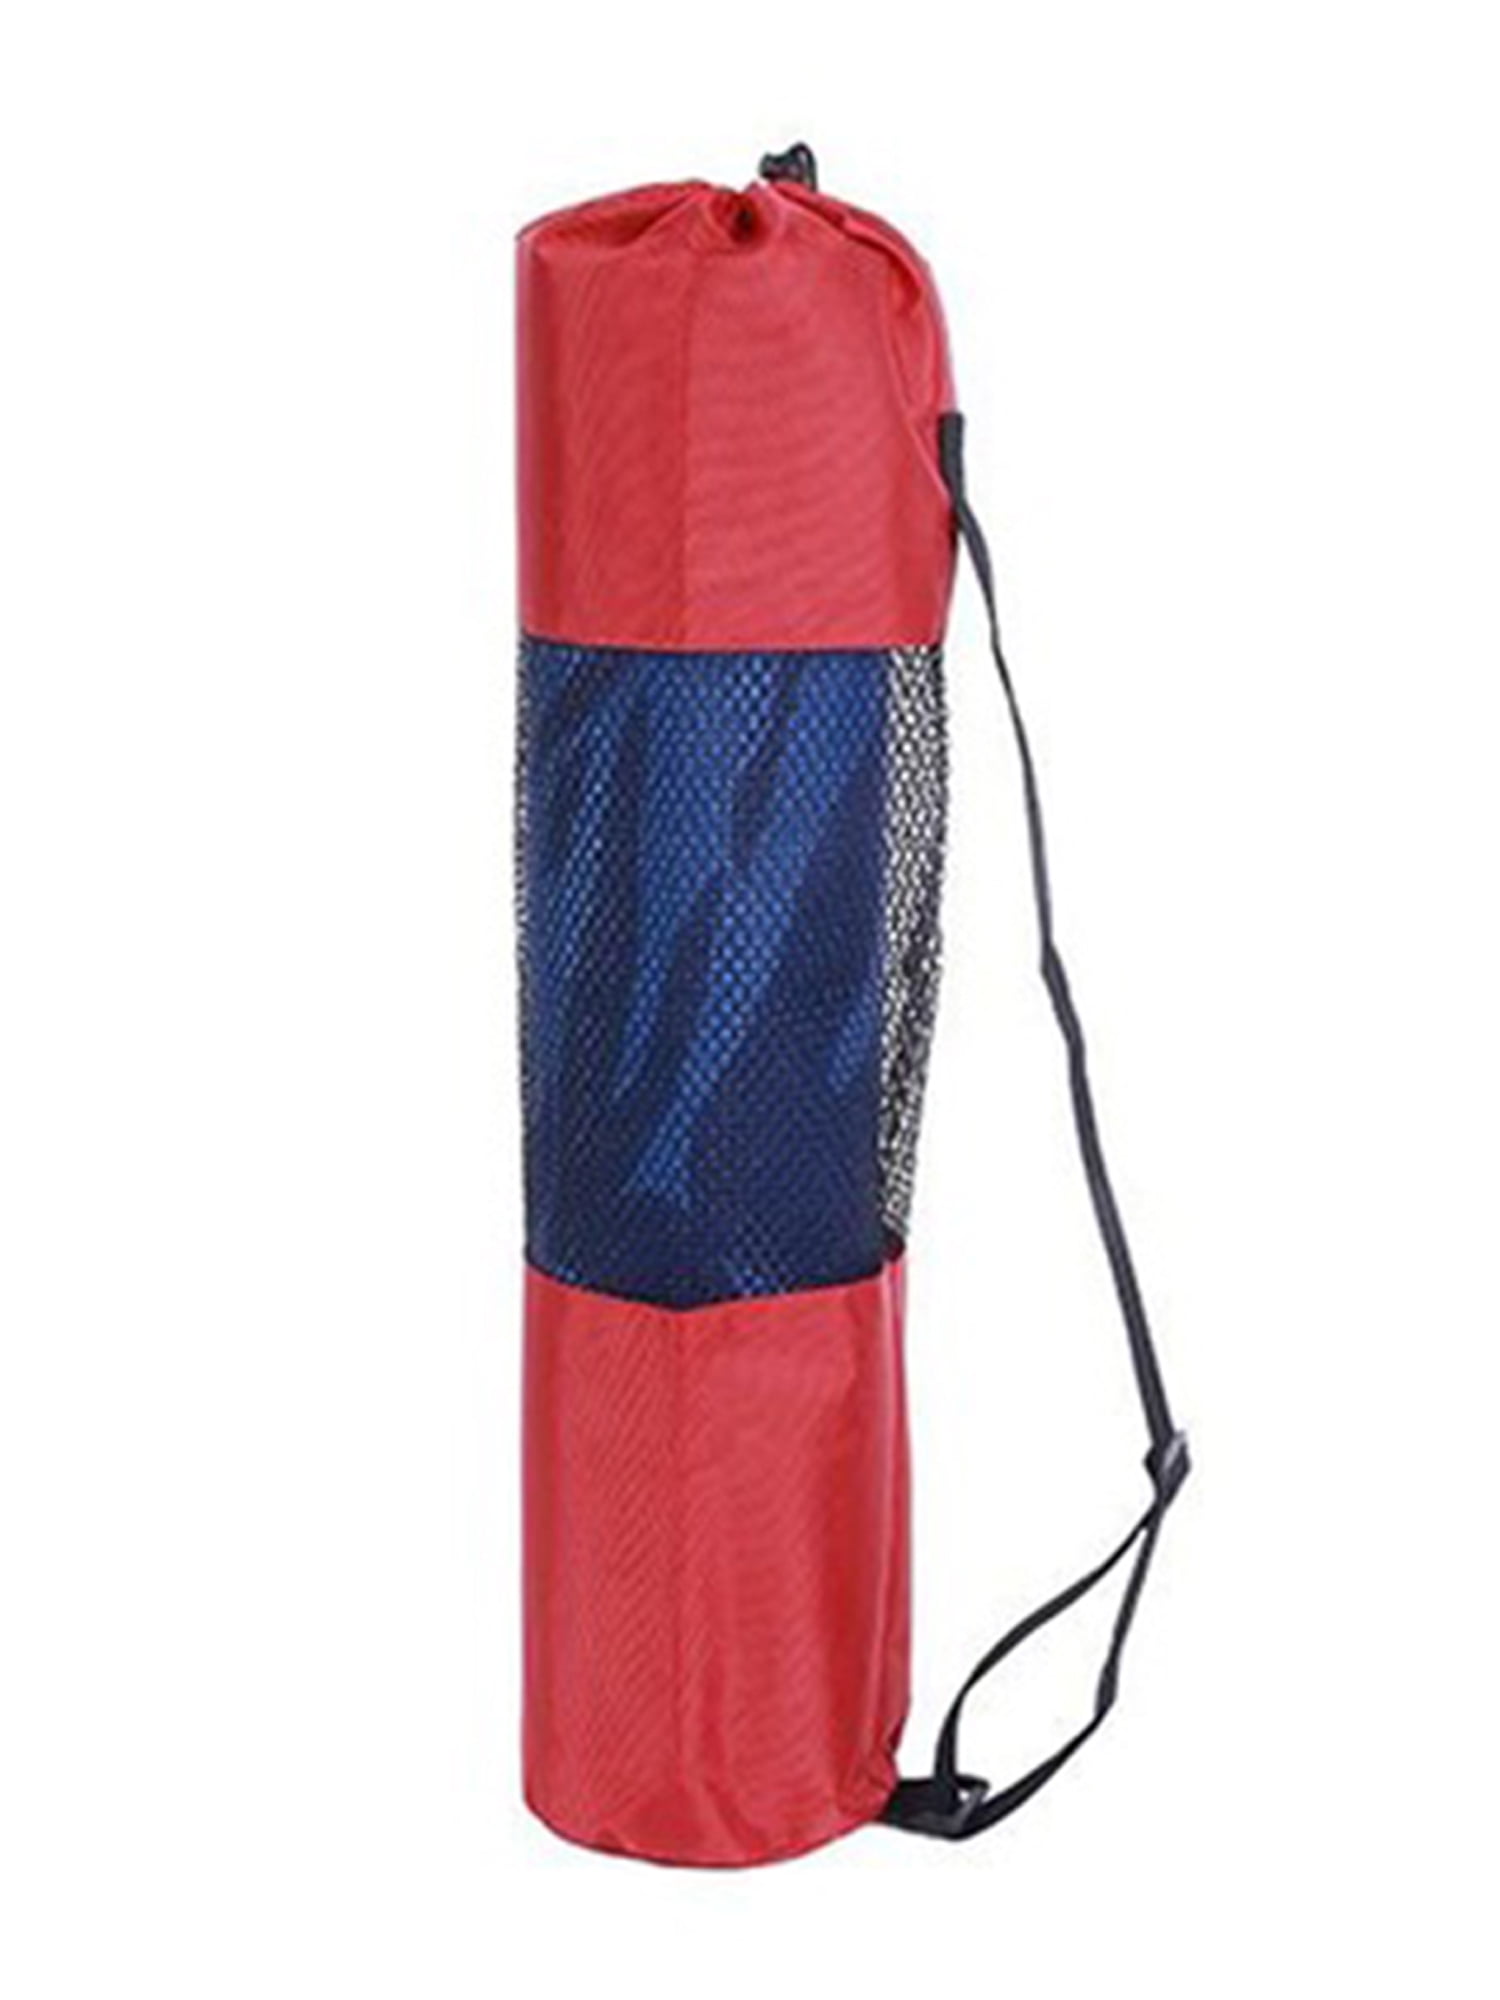 & string closure light  pockets Details about    Gaiam pink yoga mat bag with shoulder strap 